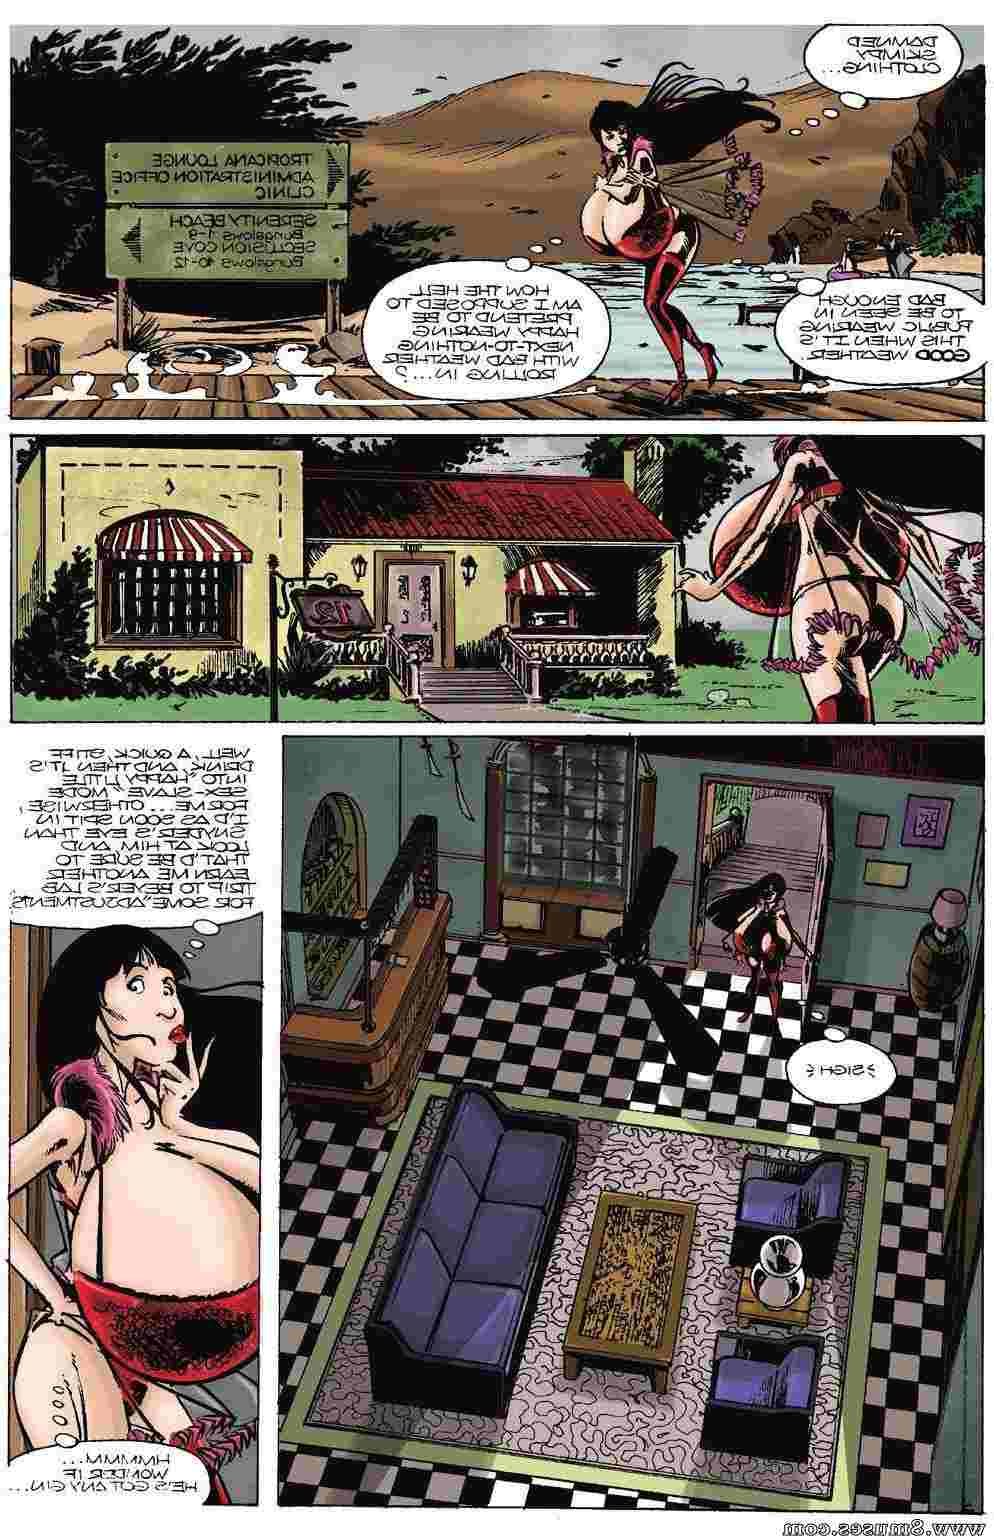 BE-Story-Club-Comics/Island-of-Dreams Island_of_Dreams__8muses_-_Sex_and_Porn_Comics_25.jpg